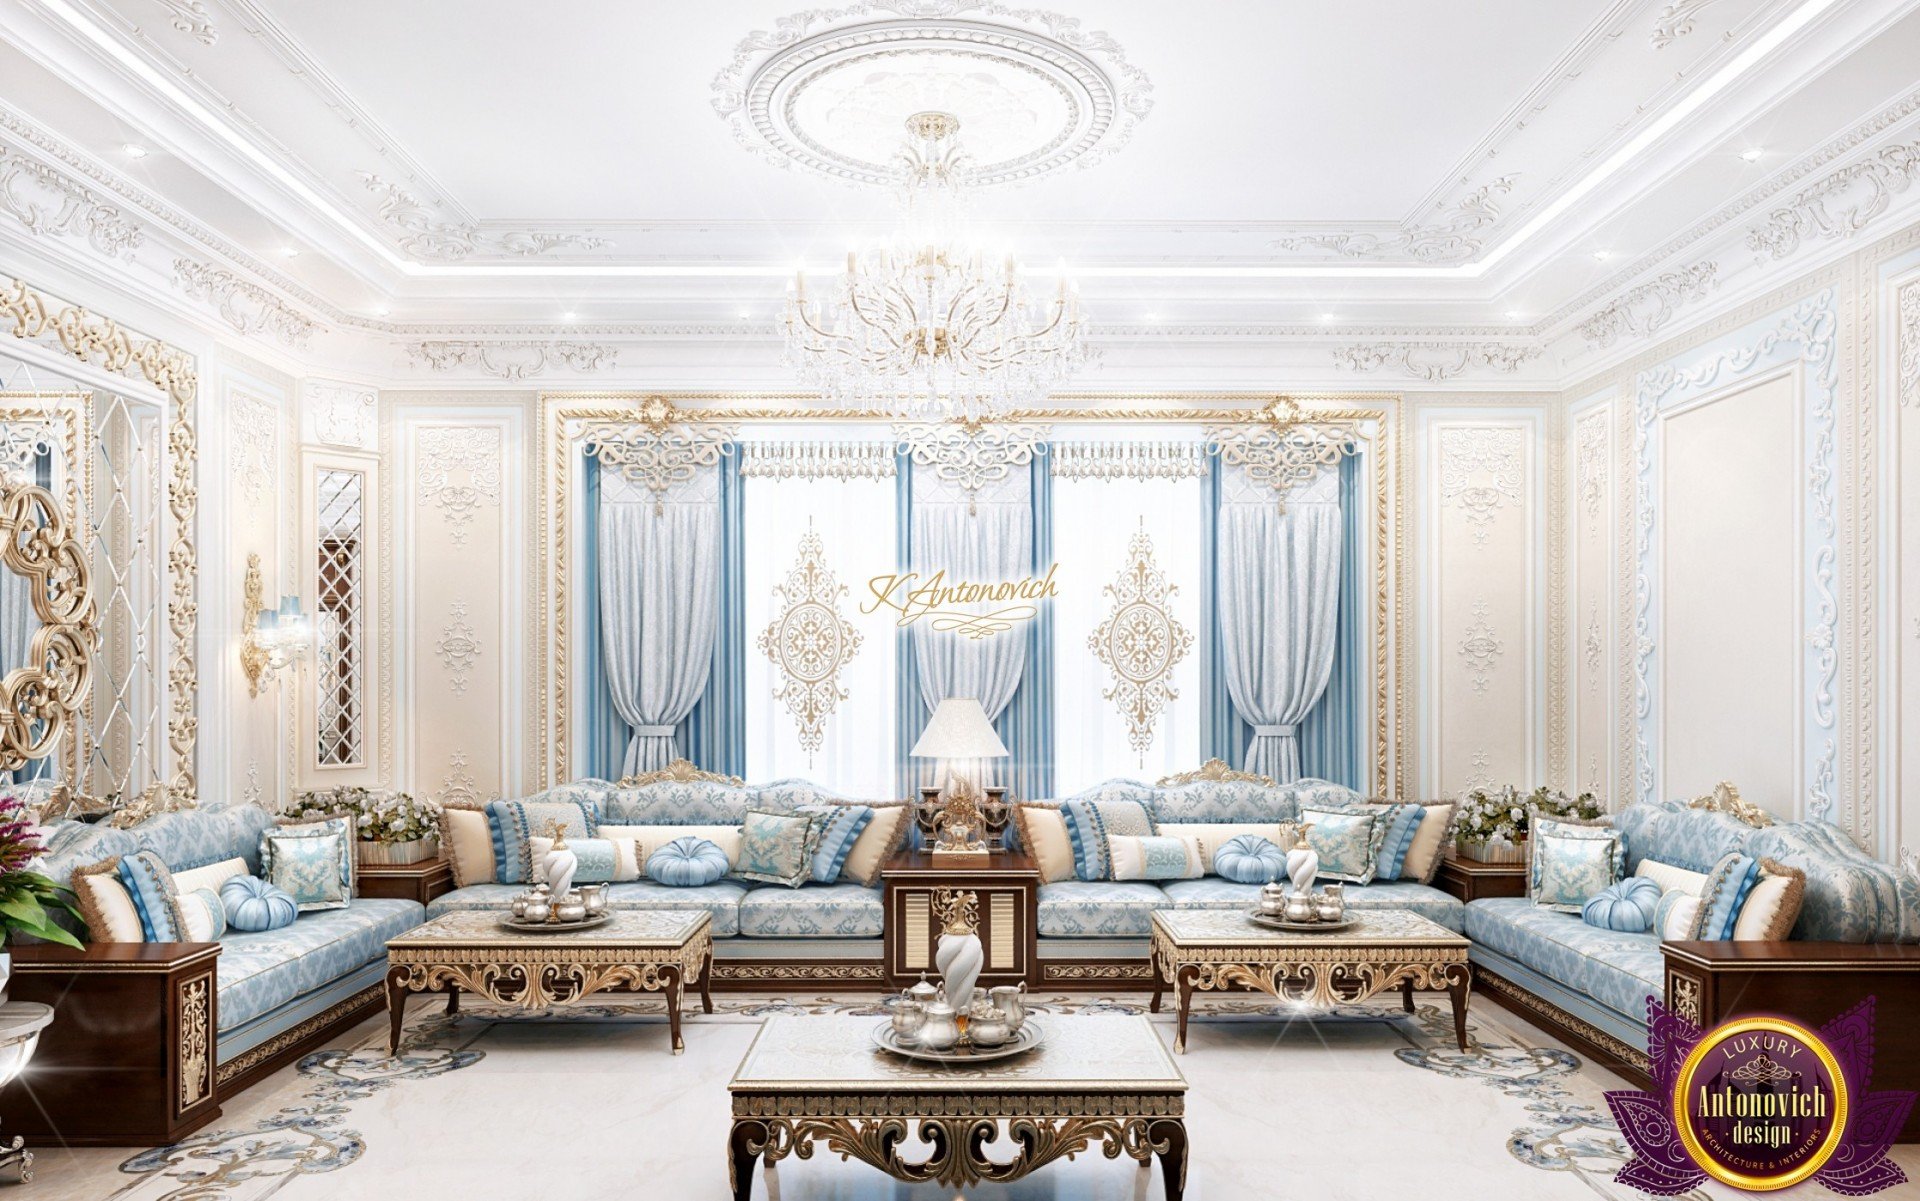 Elegant Majlis seating arrangement with plush cushions